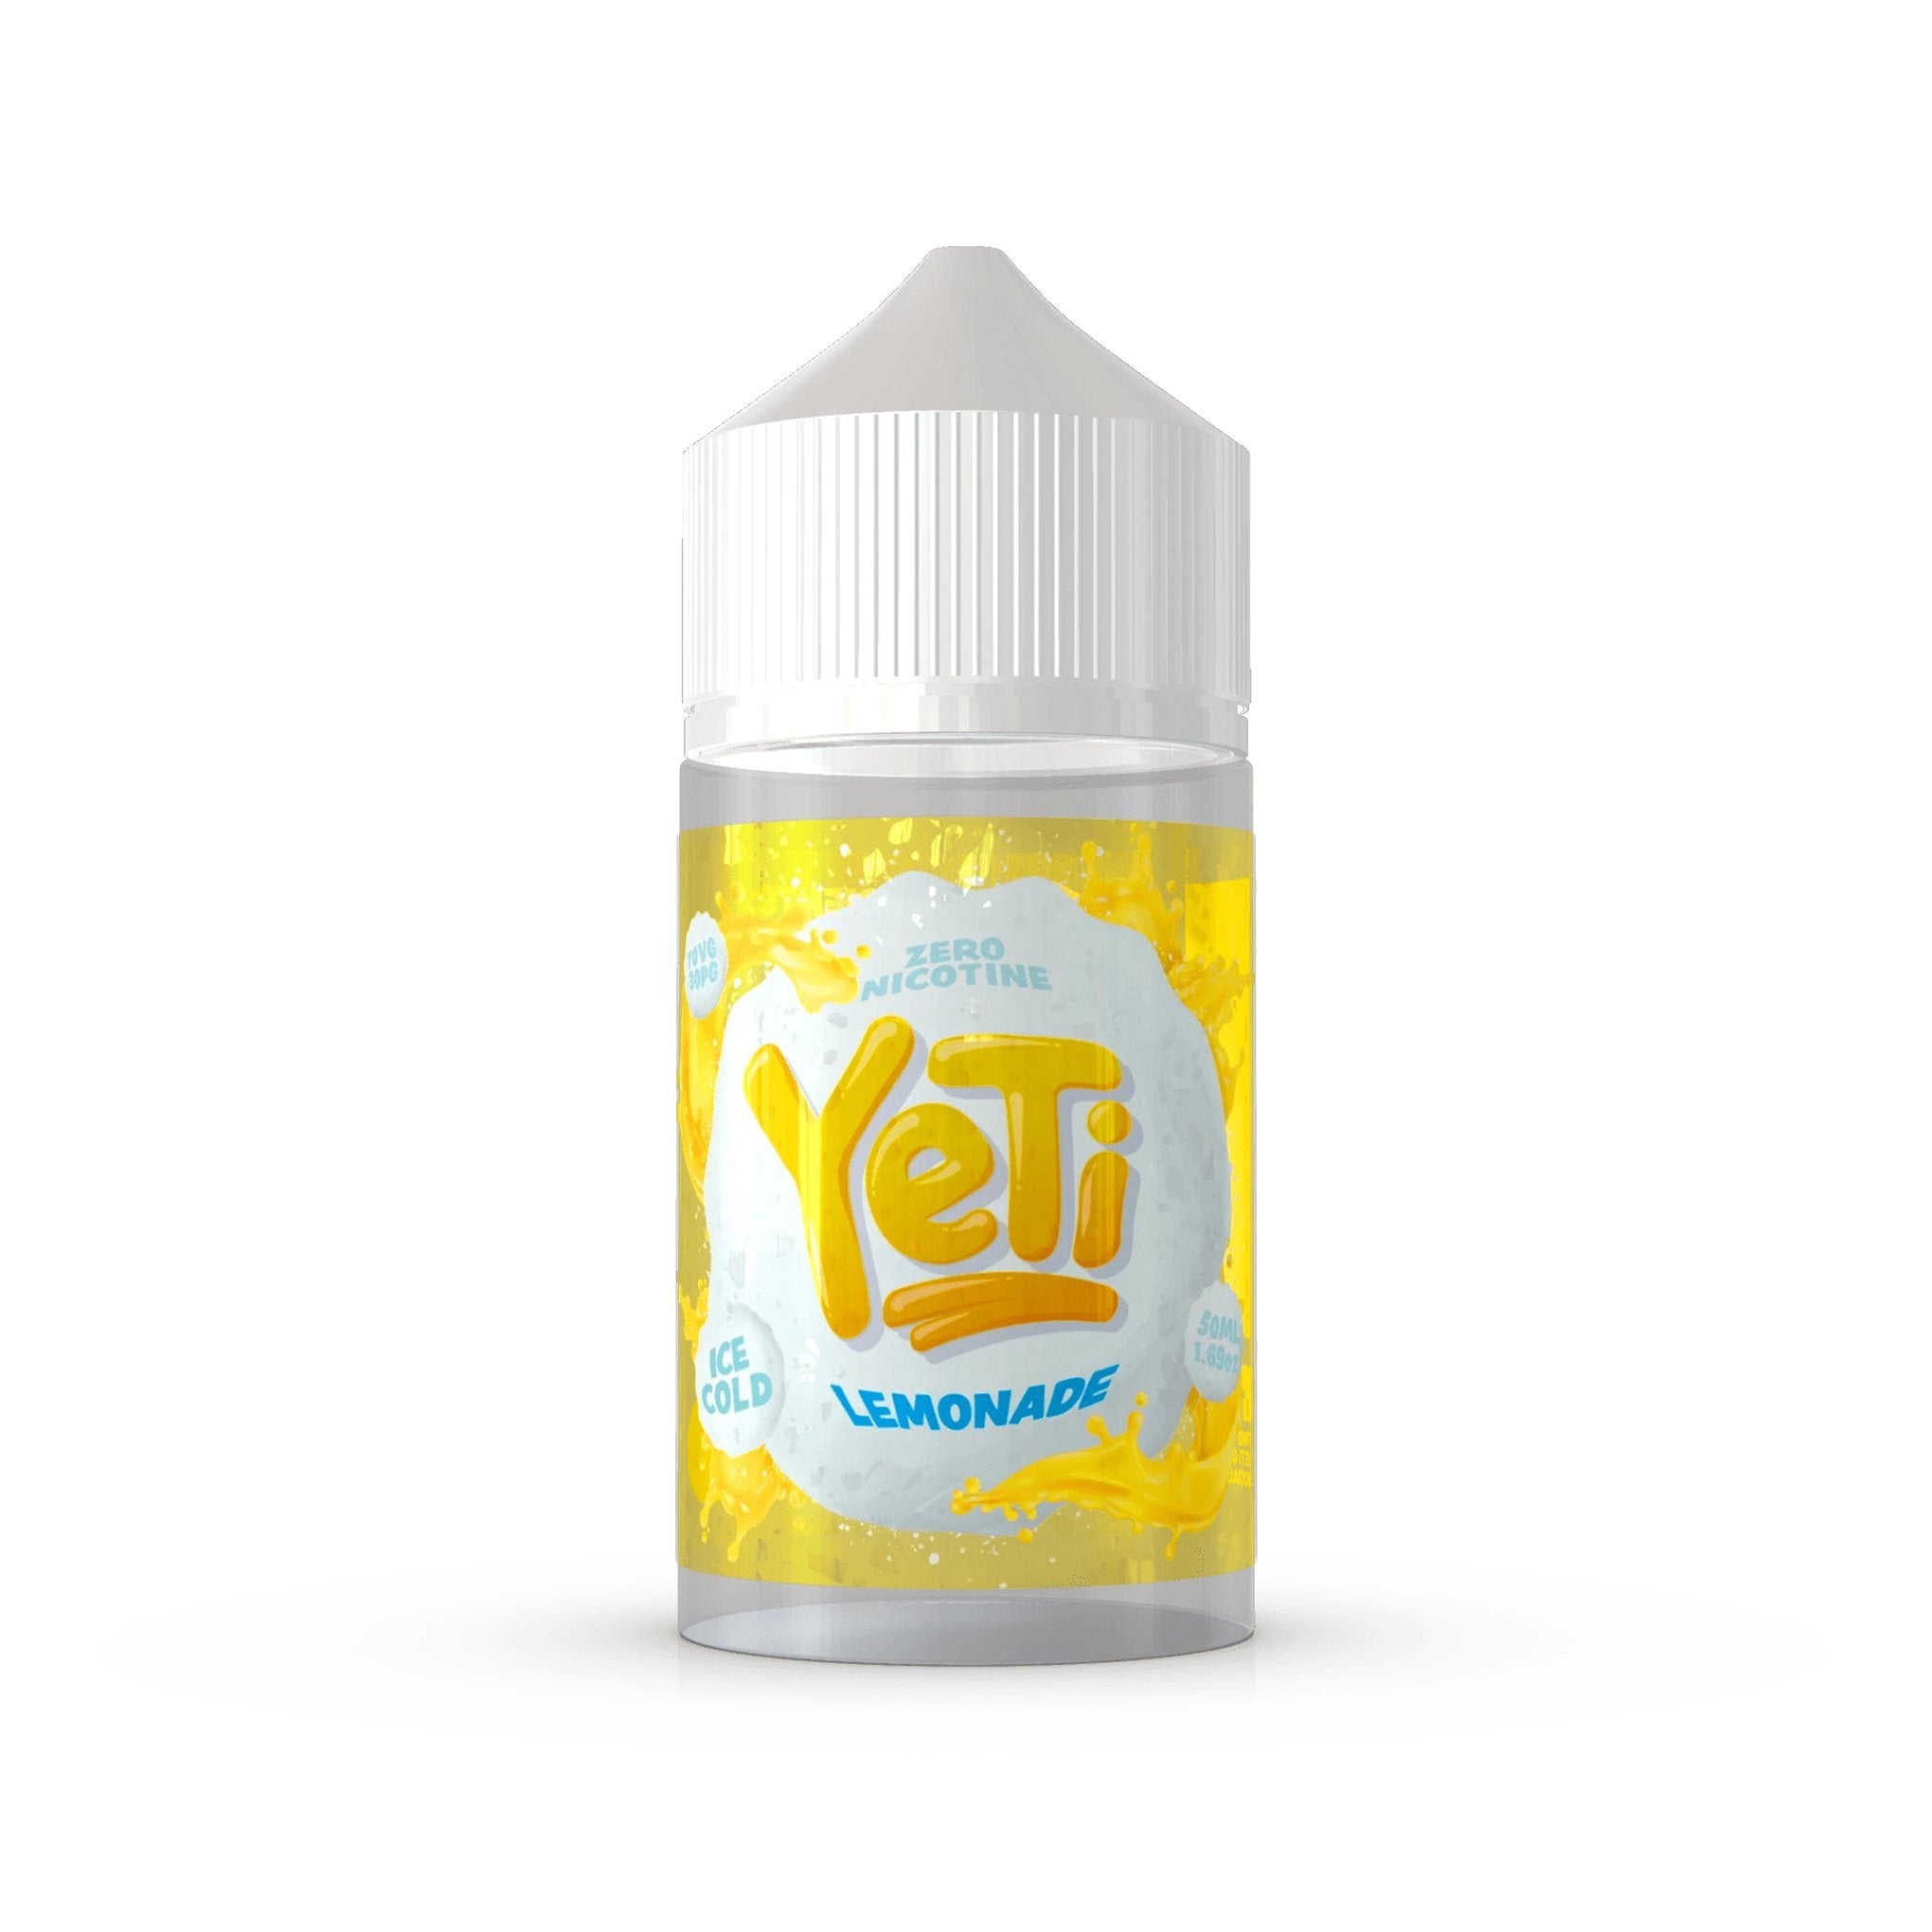 Yeti 50ml Short Fill E-Liquid Lemonade Ice